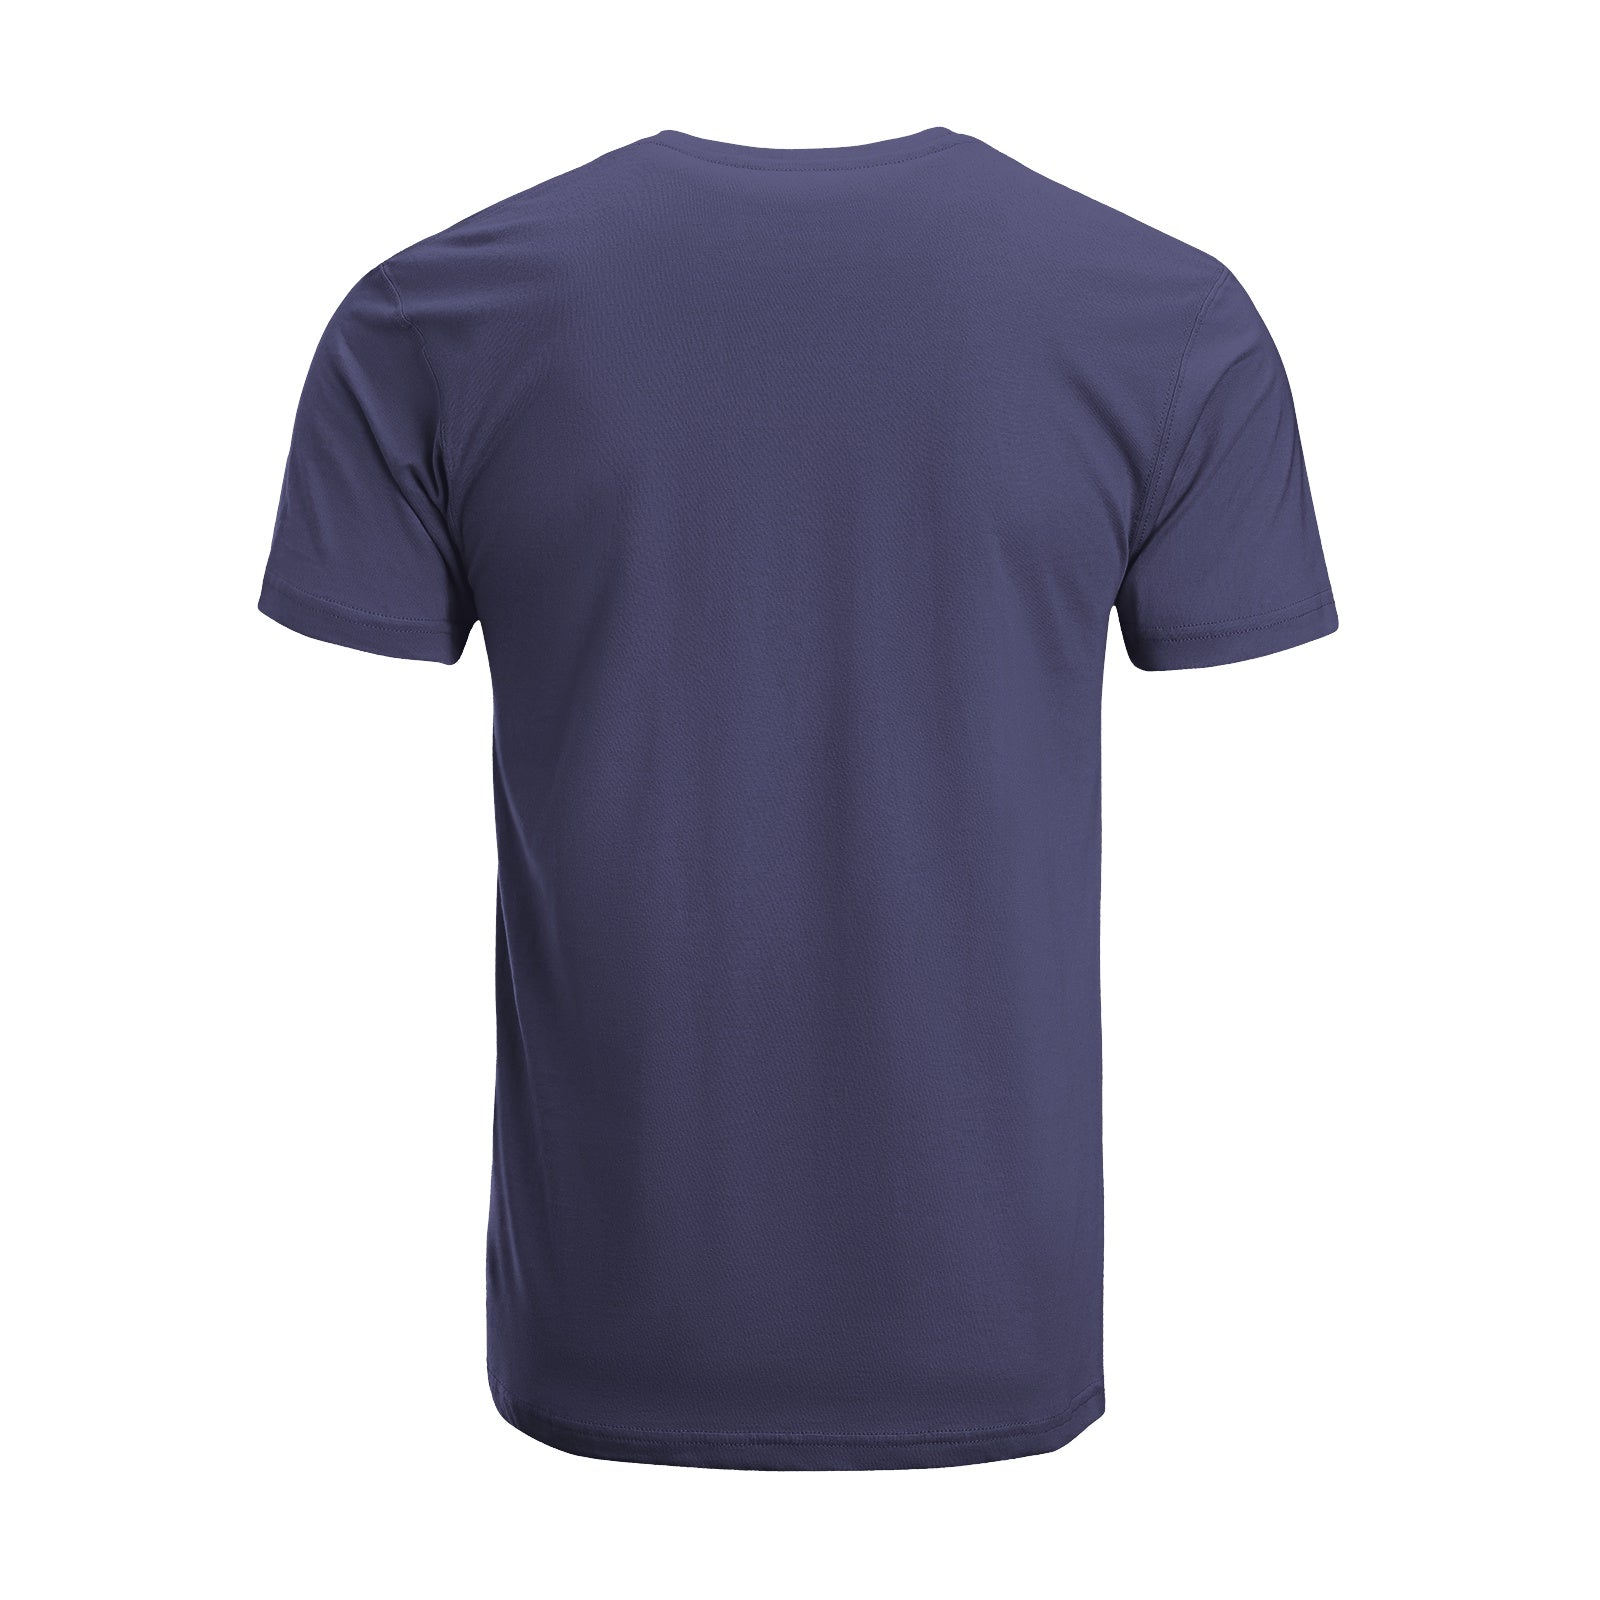 Unisex Short Sleeve Crew Neck Cotton Jersey T-Shirt Gym No. 28 - Tara-Outfits.com